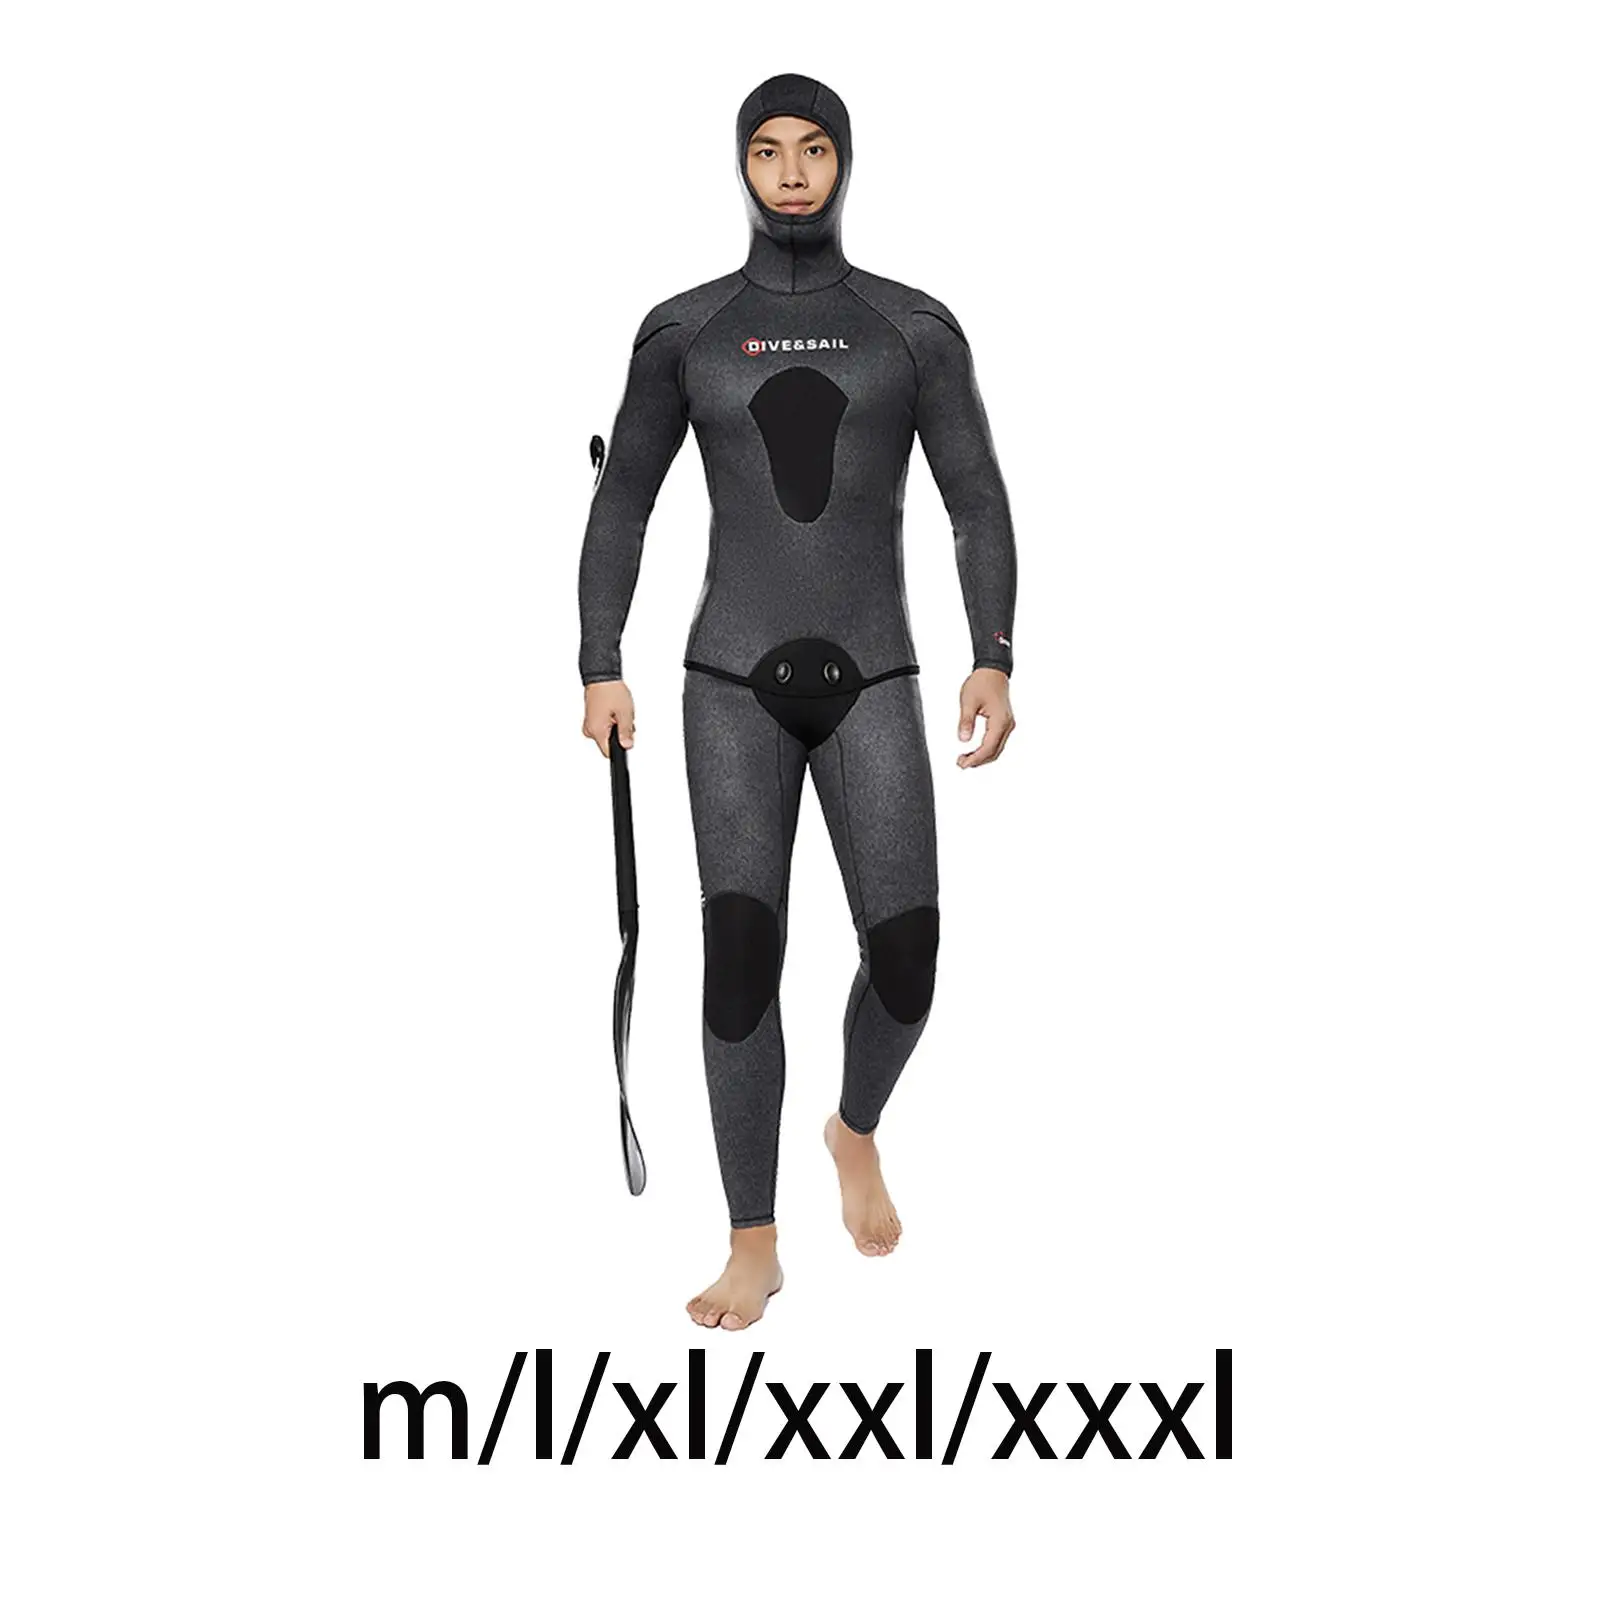 Mens Wetsuit Split 3mm Neoprene Wet suits for Kayaking Water Sports Canoeing